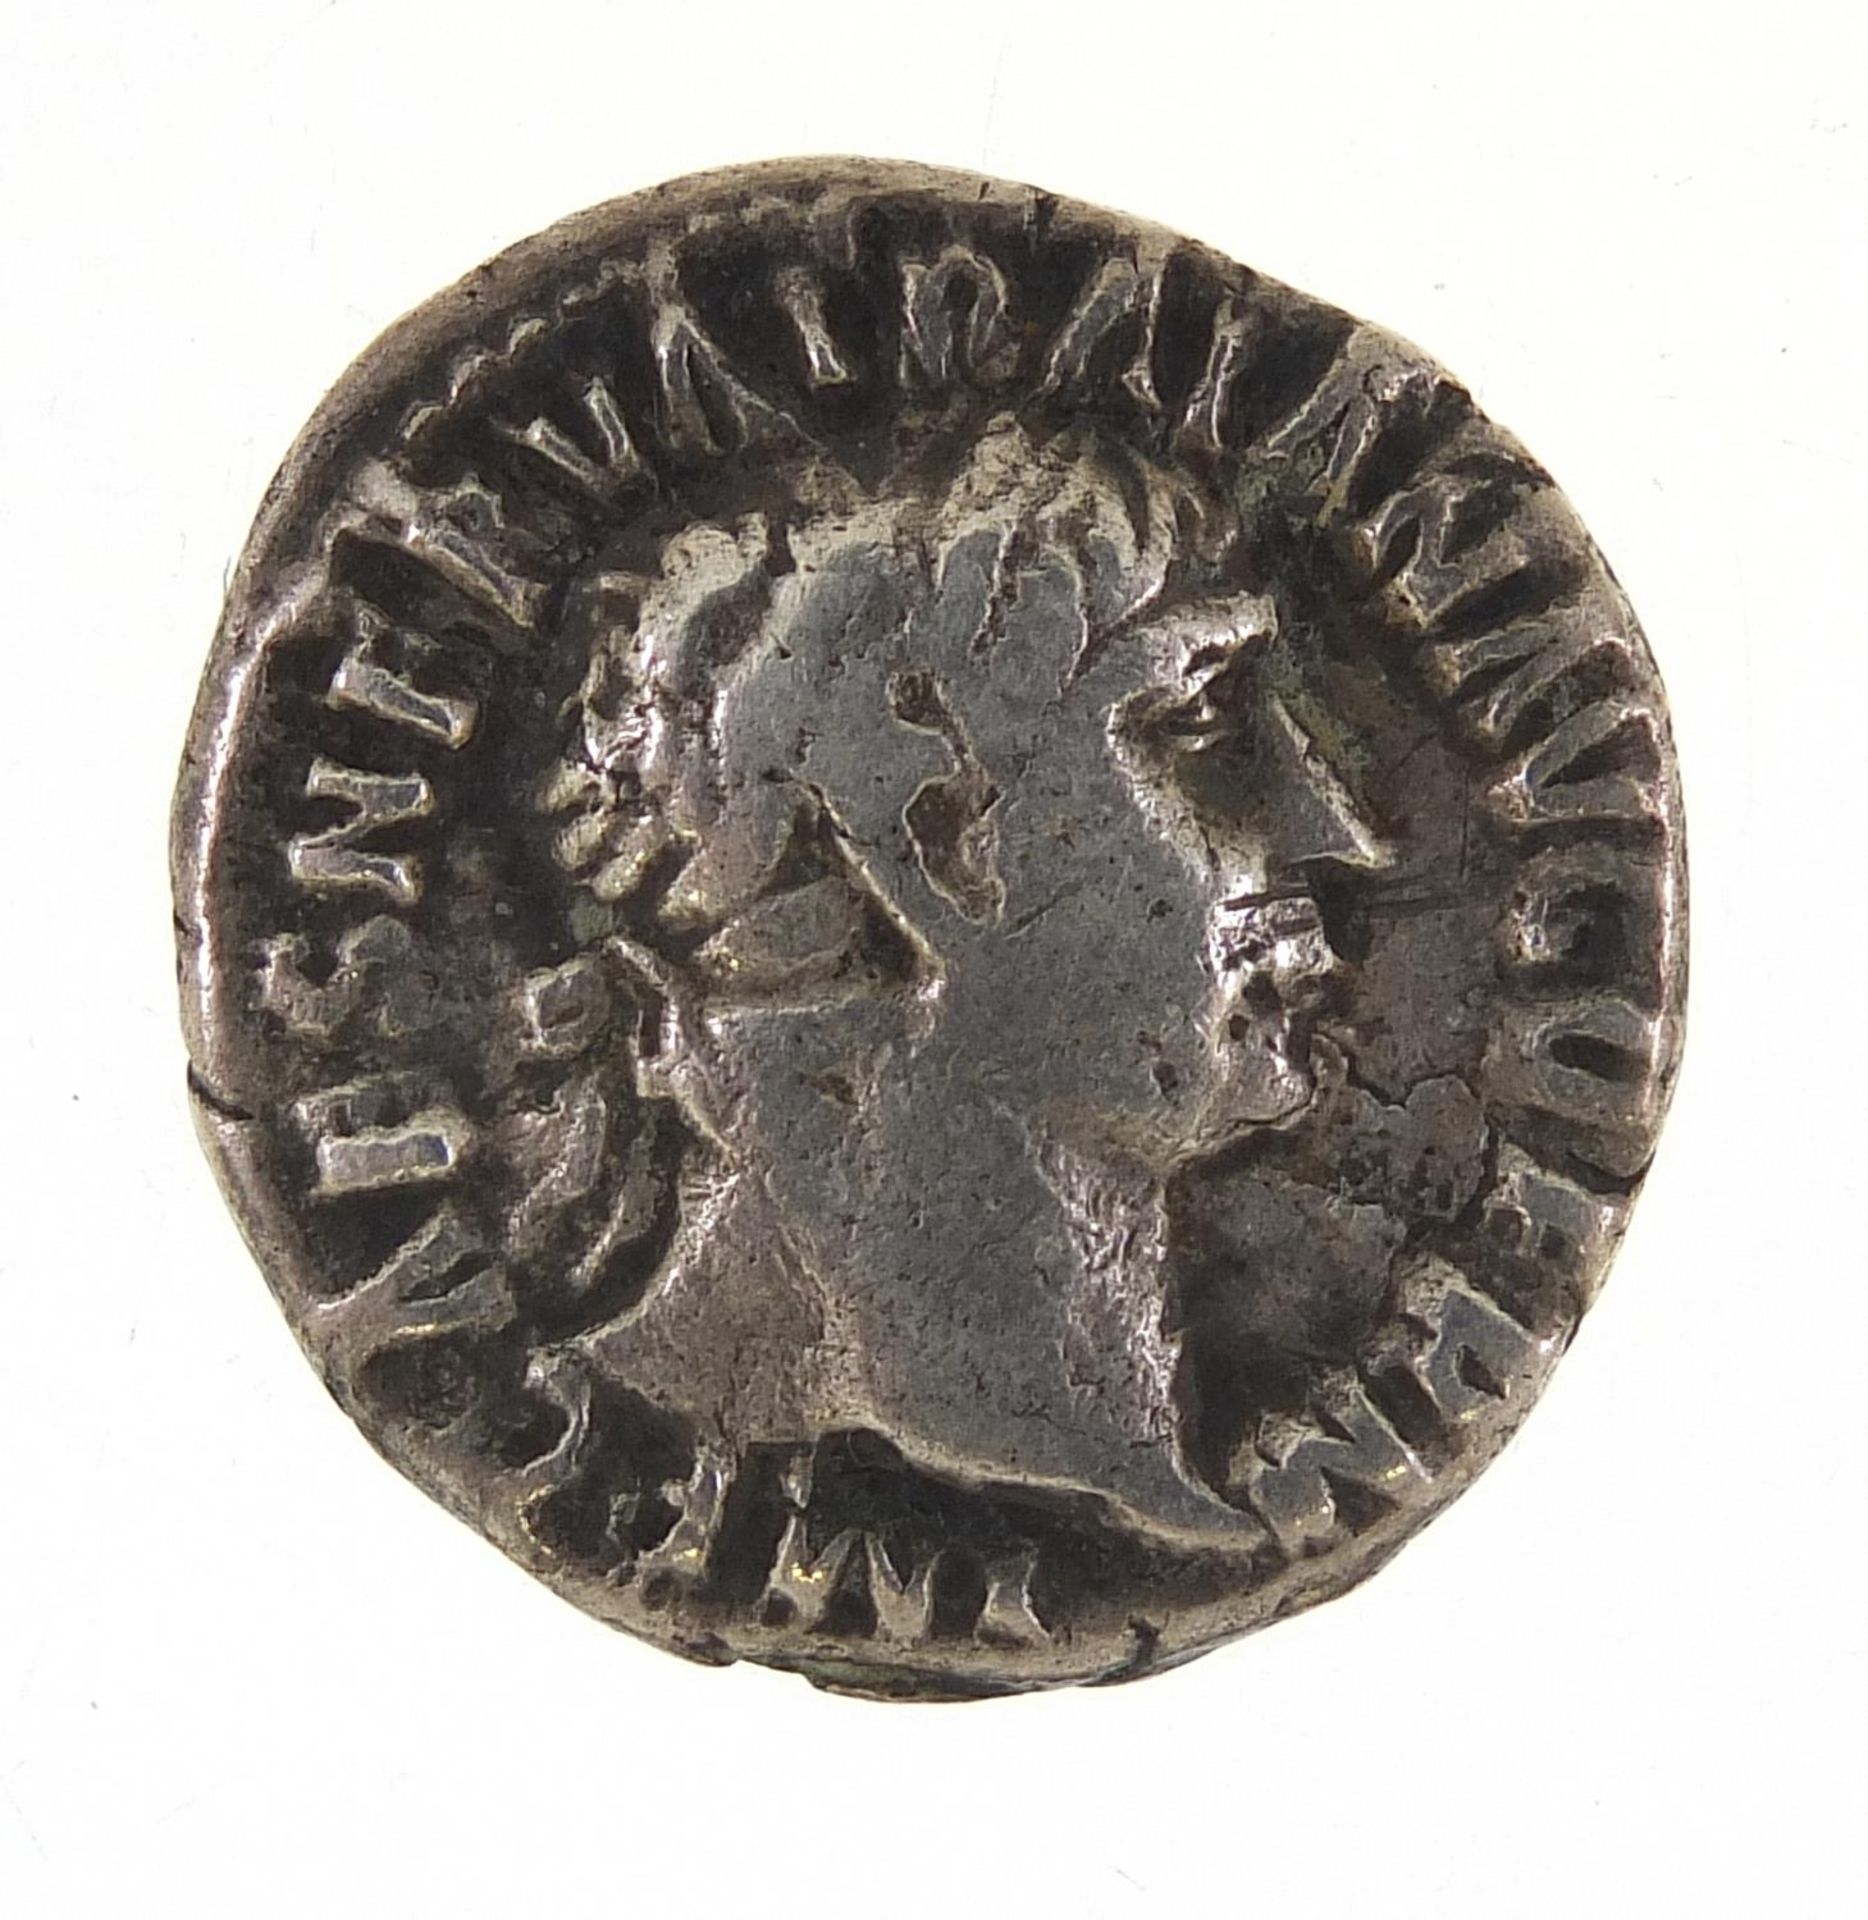 Roman silver coin, 18mm in diameter